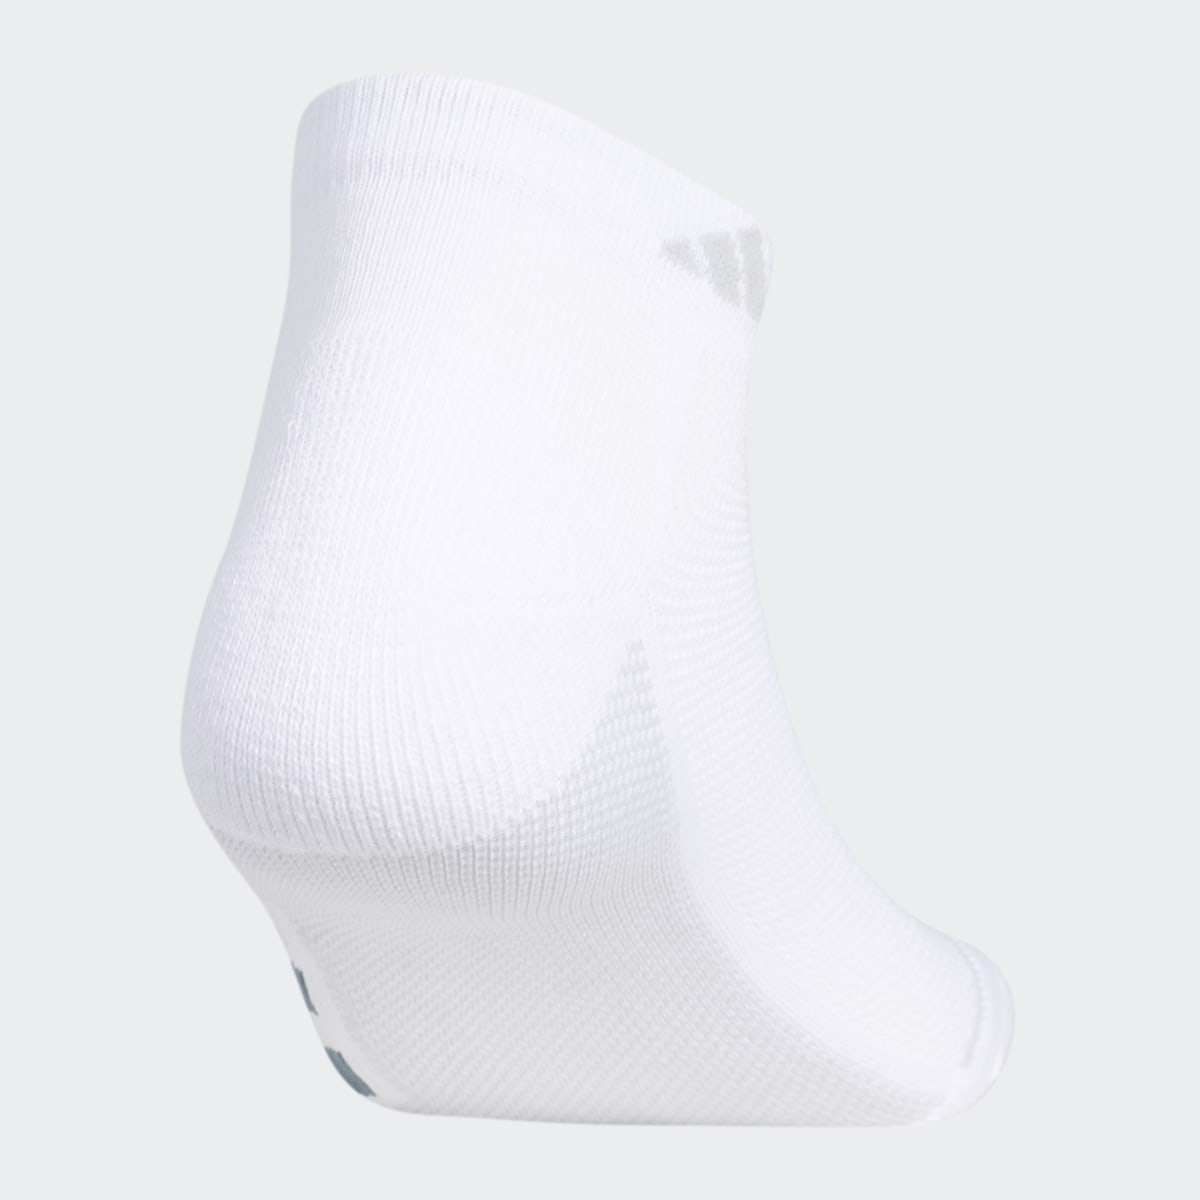 Adidas Superlite Stripe Low-Cut Socks 3 Pairs. 5